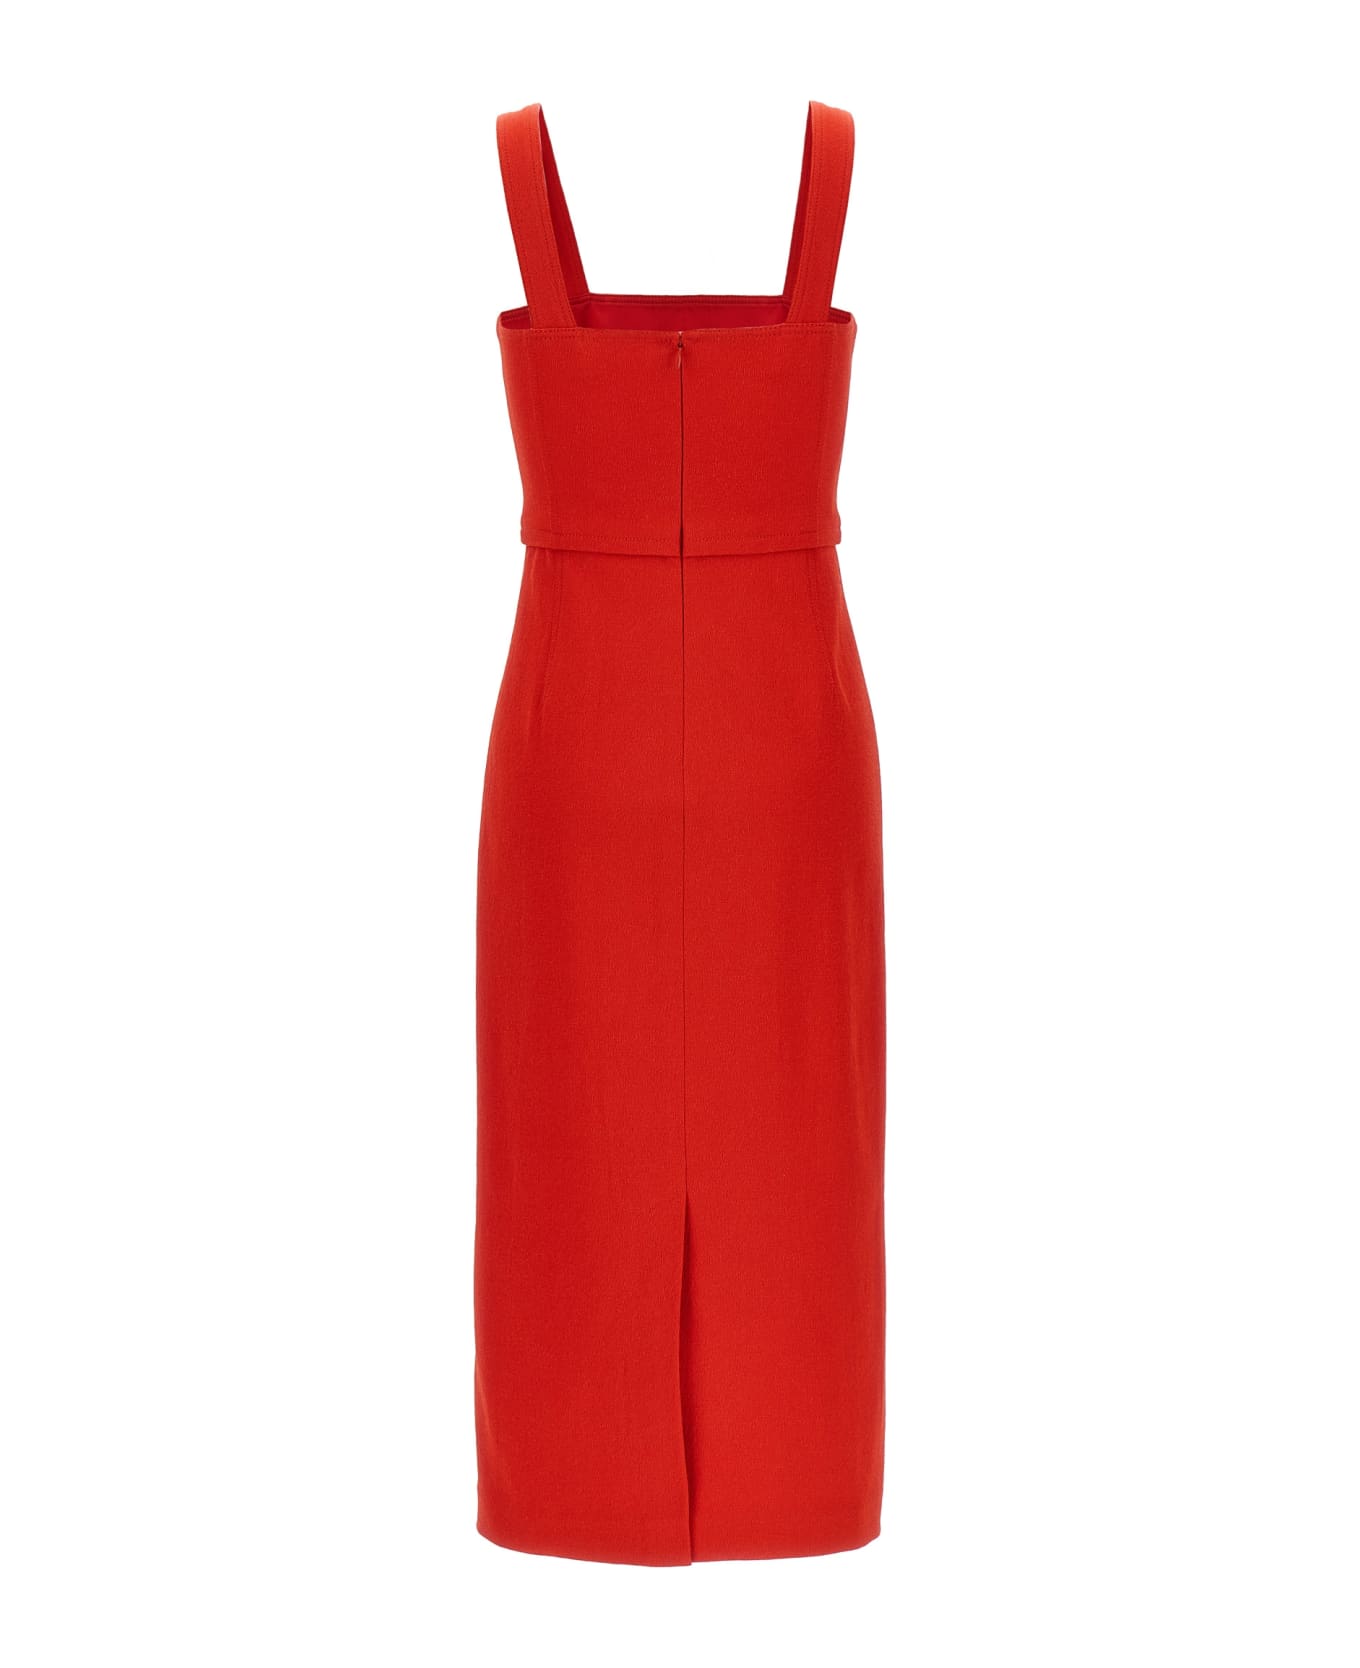 Tory Burch Faille Stretch Dress - Red